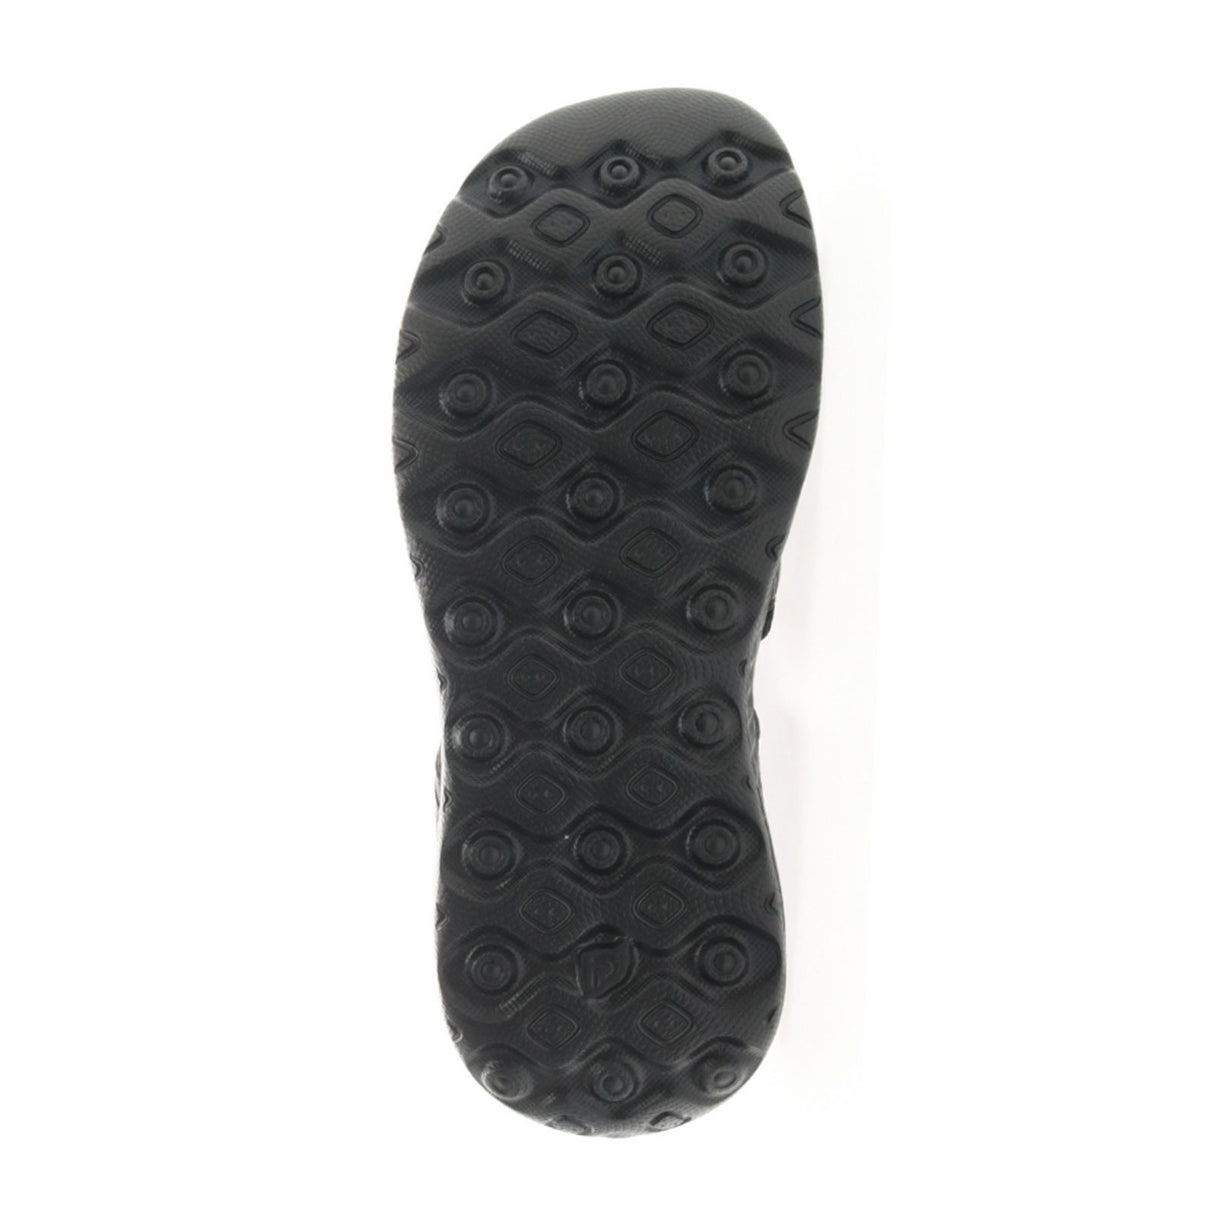 Propet Travelactiv Adventure Active Sandal (Women) - Black Sandals - Active - The Heel Shoe Fitters